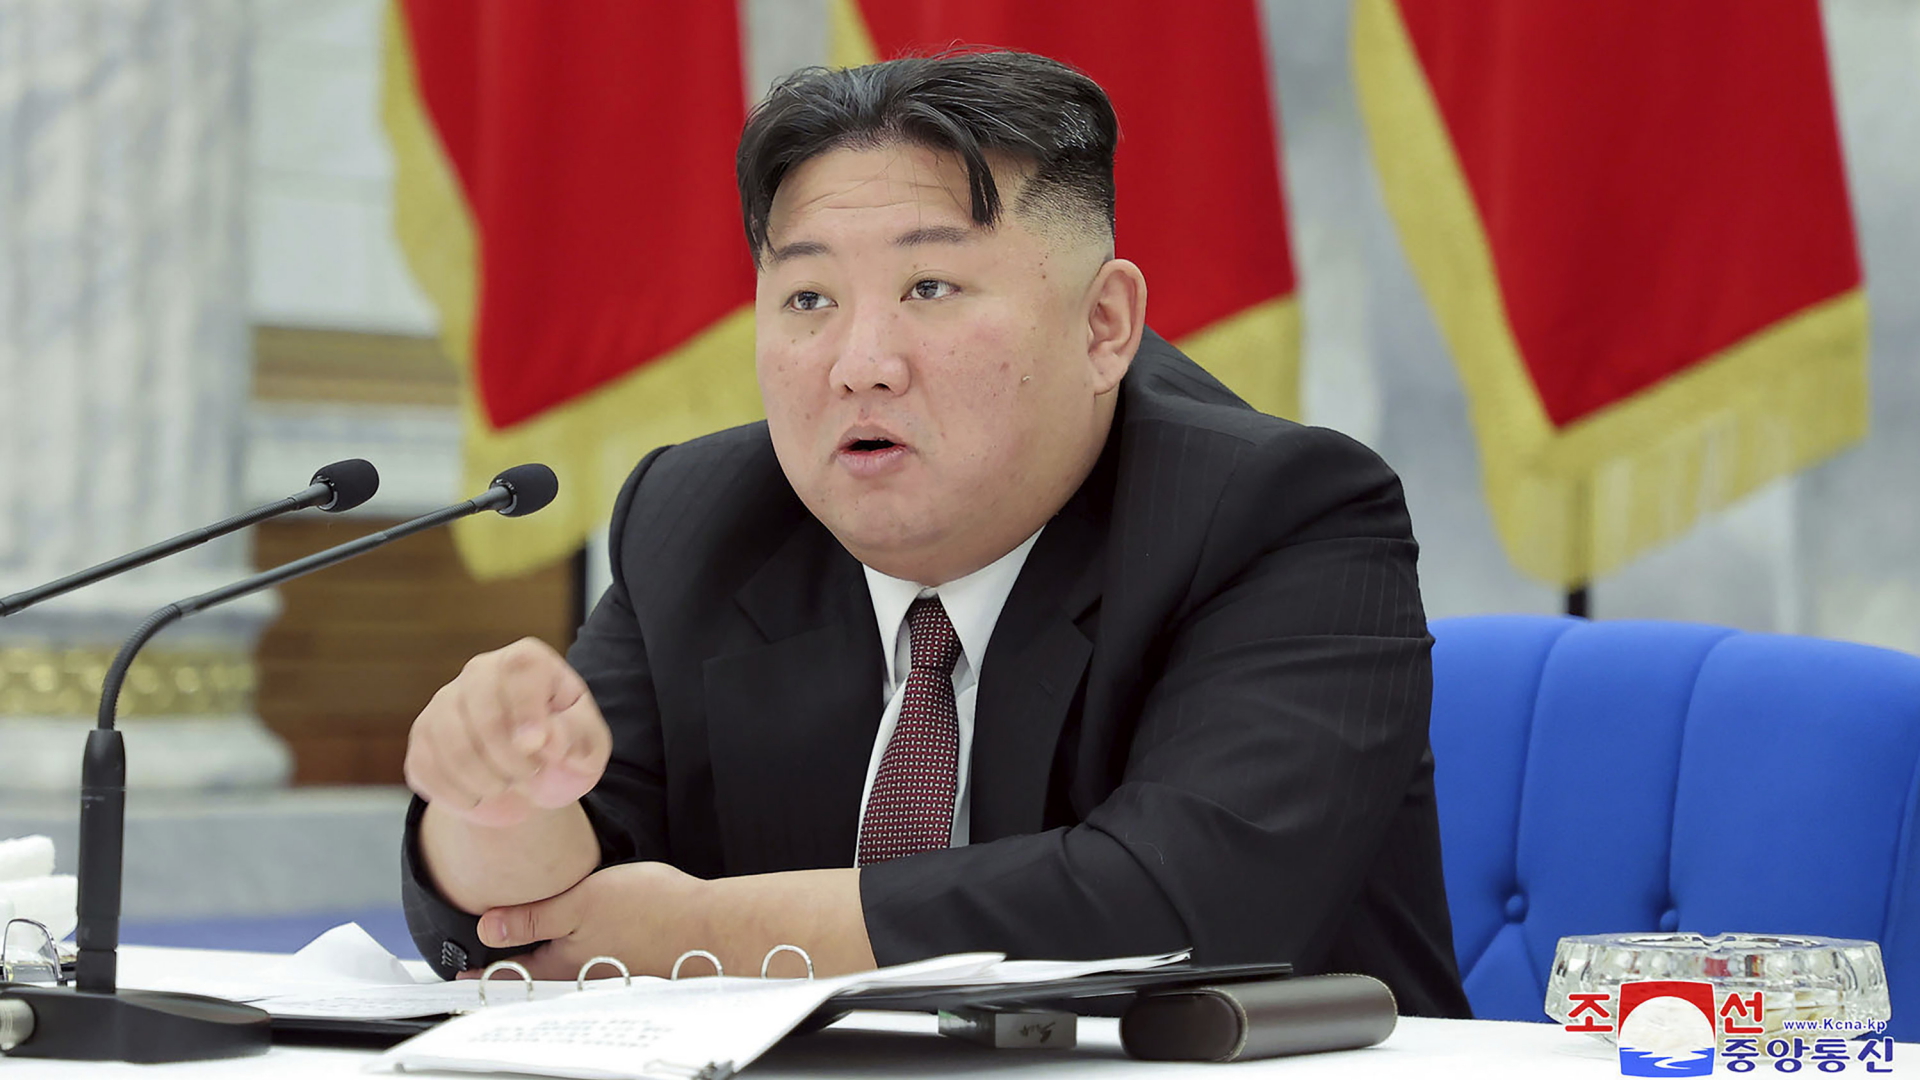 Trotz UN-Resolution: Nordkorea testet erneut Raketen